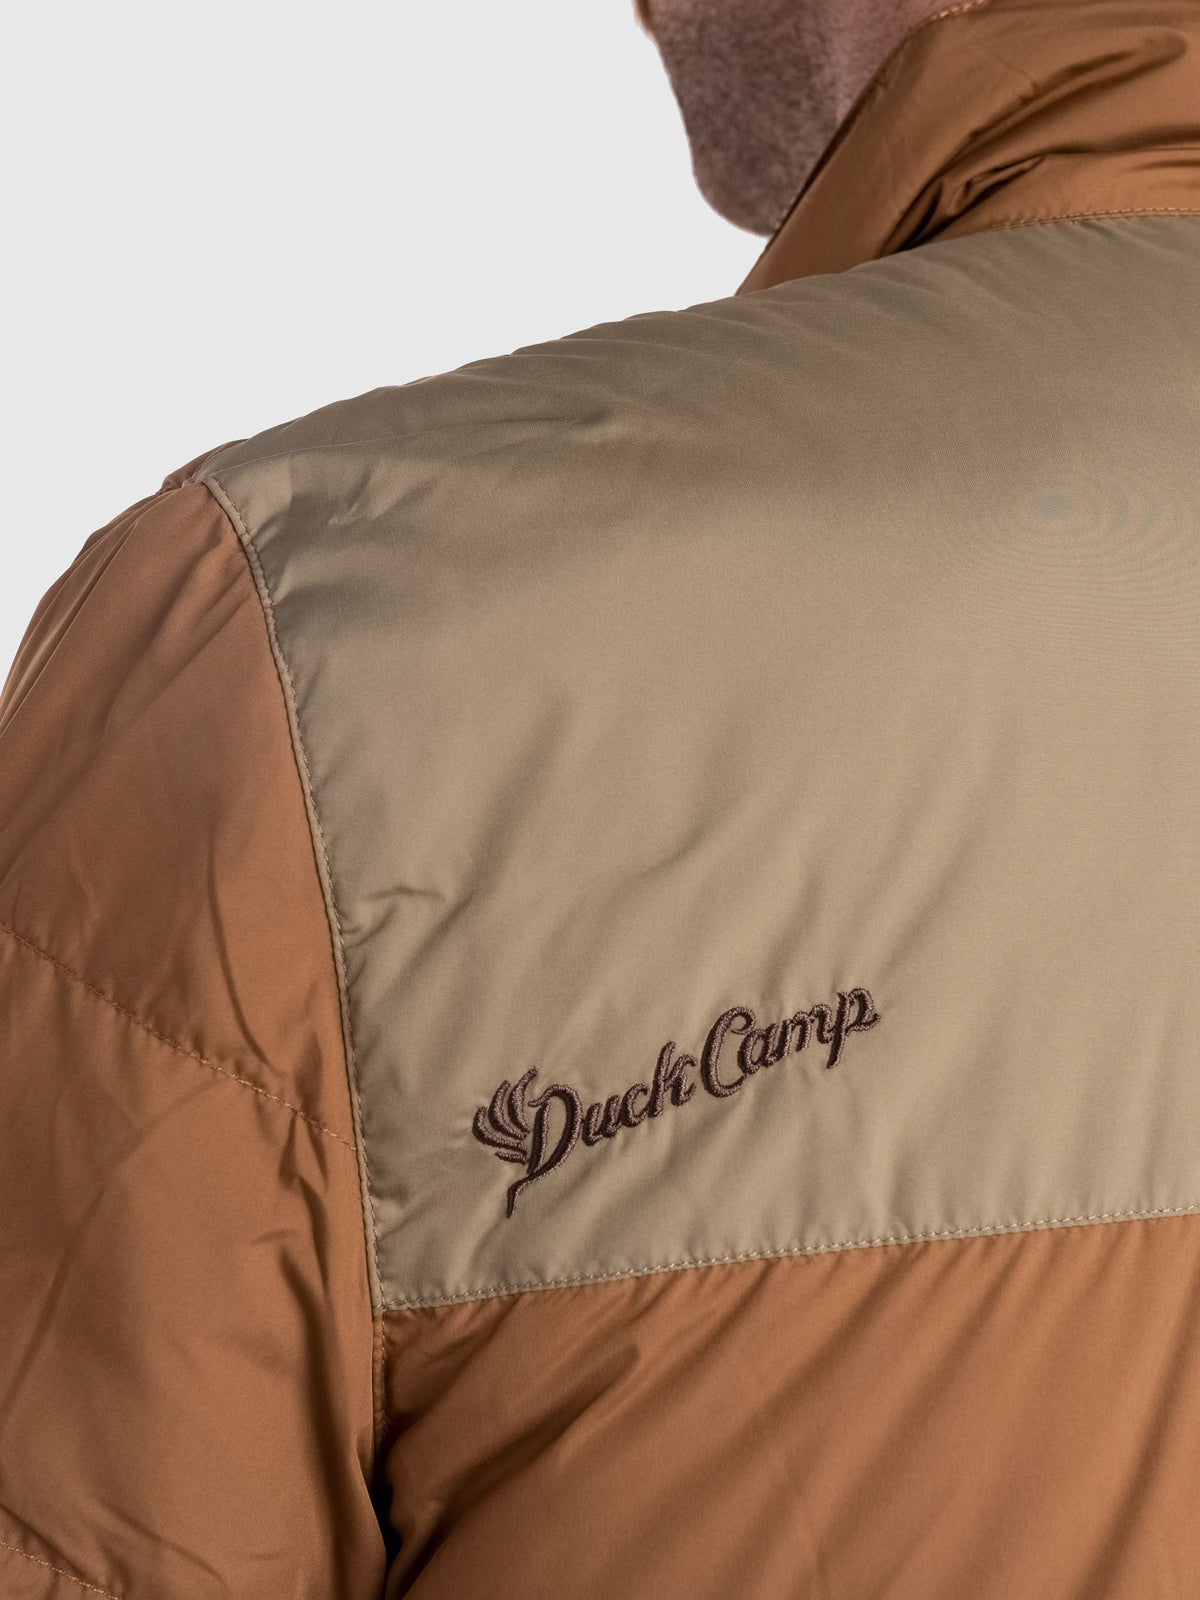 DryDown Reversible Jacket - Pintail / Midland